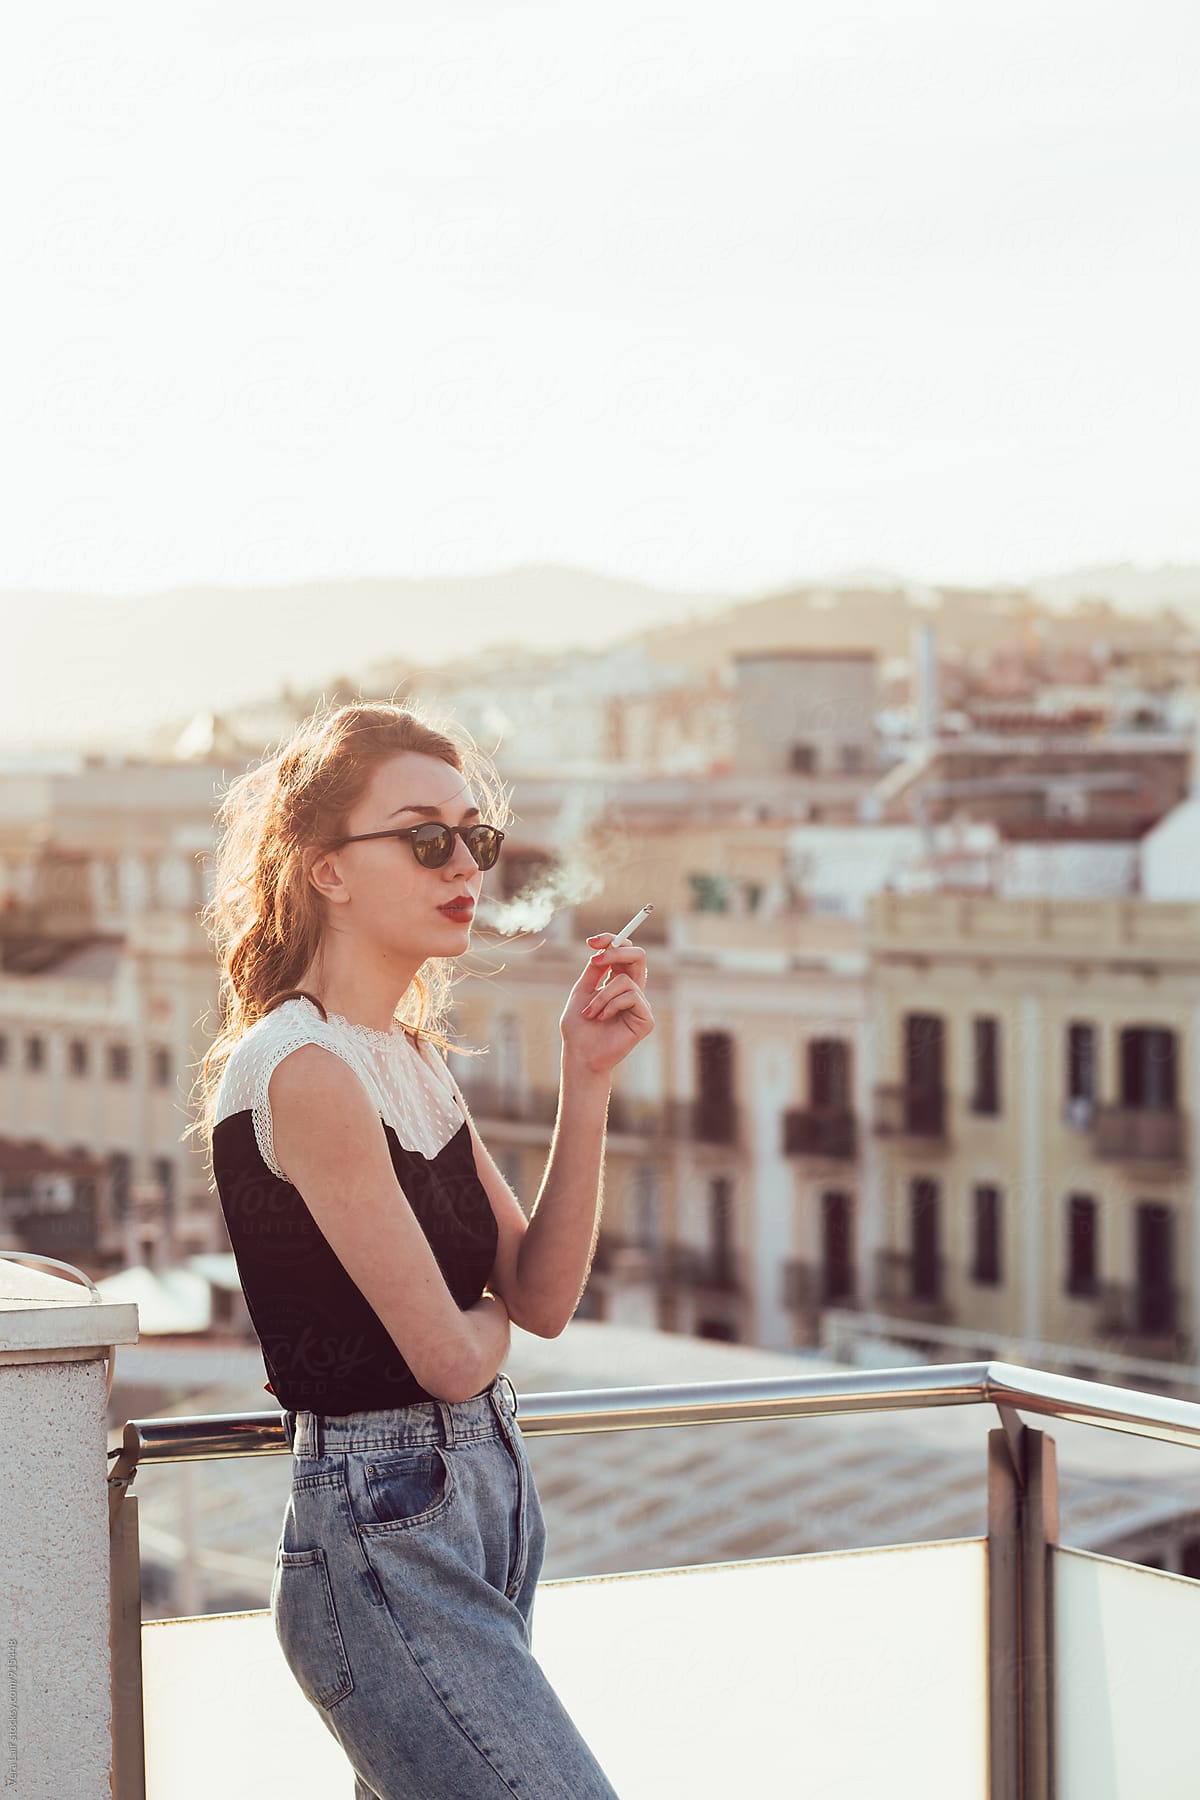 Beautiful woman smoking outdoor